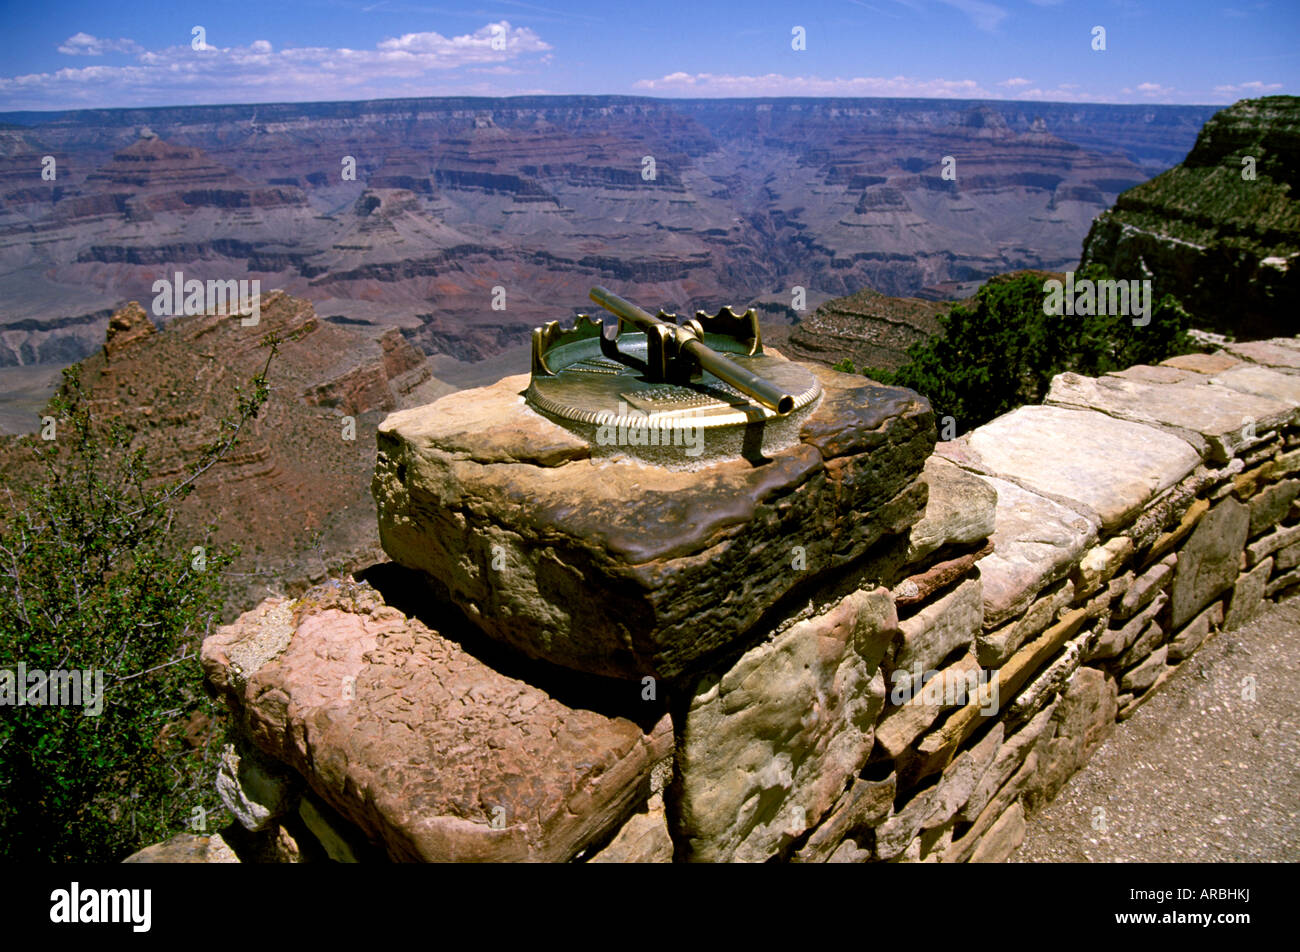 Grand-Canyon-Nationalpark Arizona AZ Sichtung Instrument am South Rim Erosion Klippen Geologie rockt ariden Colorado River Stockfoto